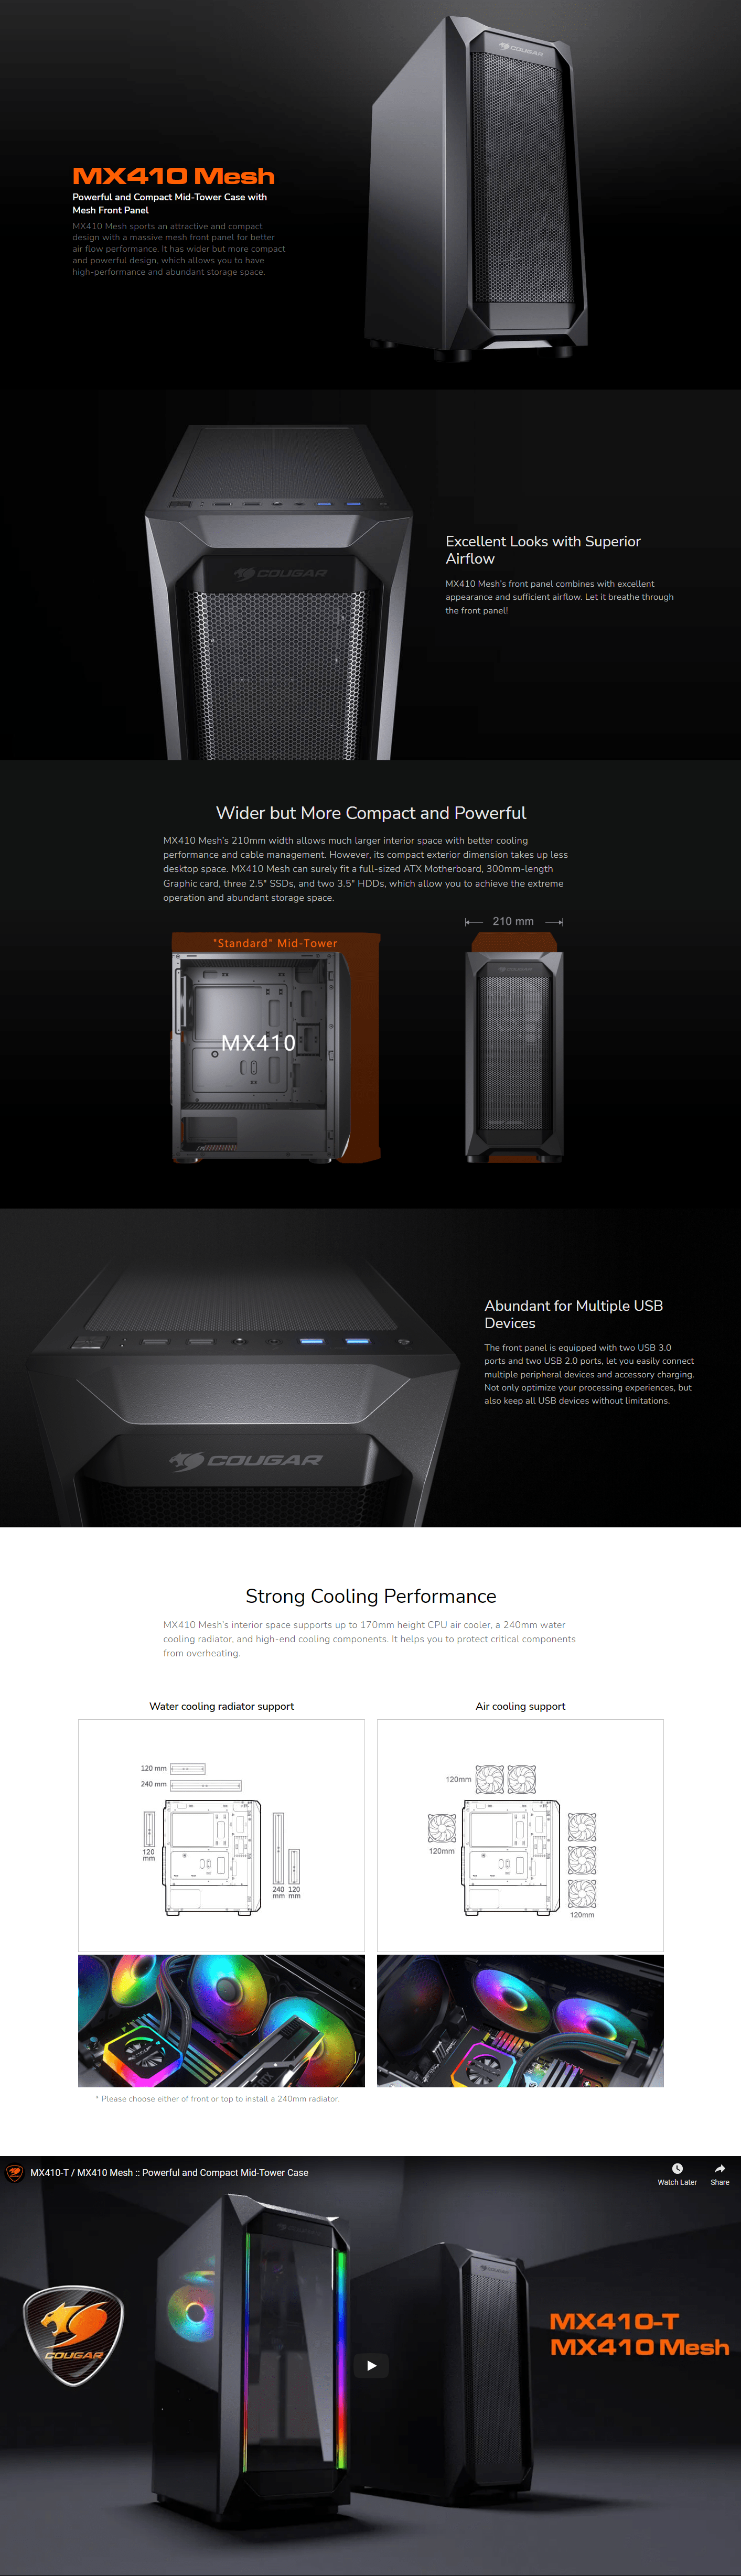 xtreme hardware Cougar MX410 Case (Mesh) 